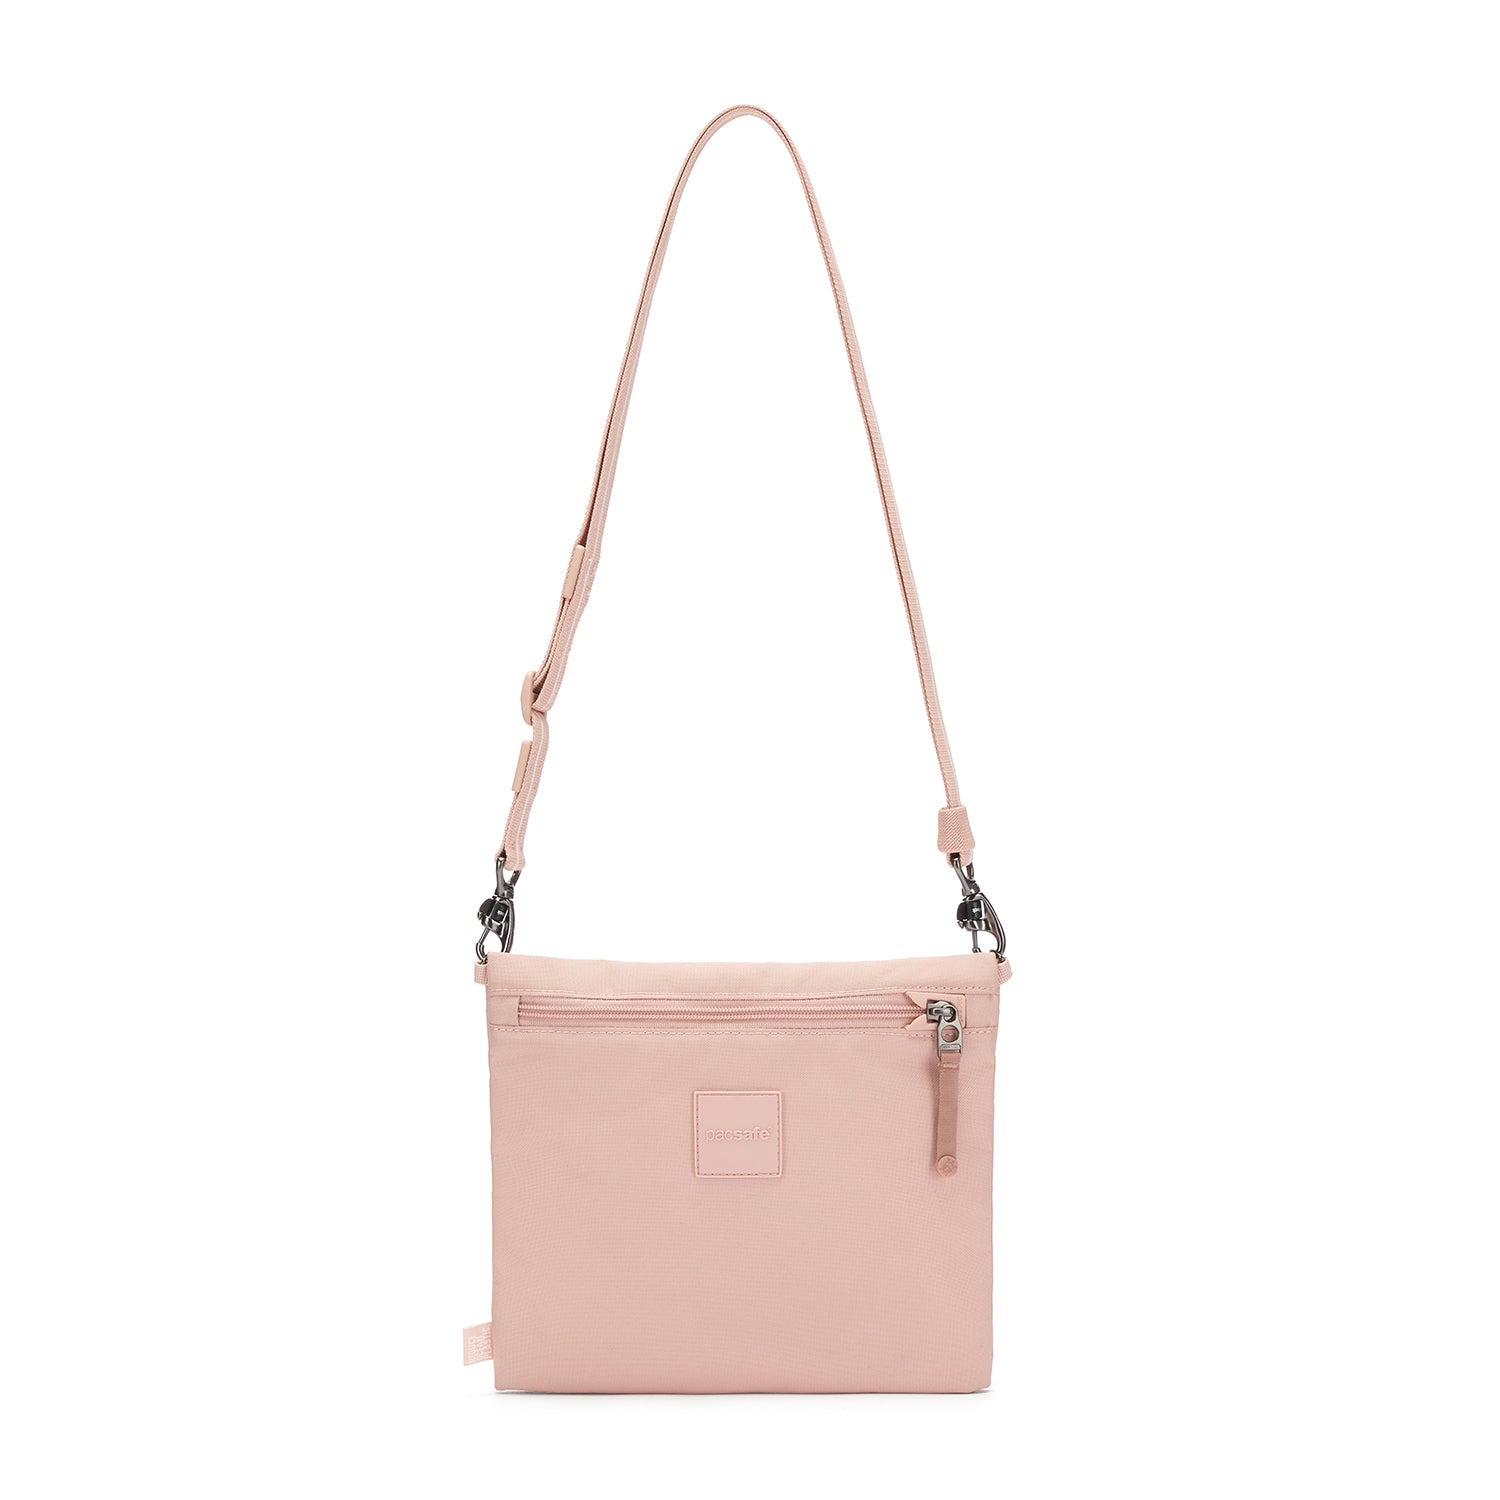 Shoulder Bag Pu Leather Lacoste handbags, For Office, Size: H